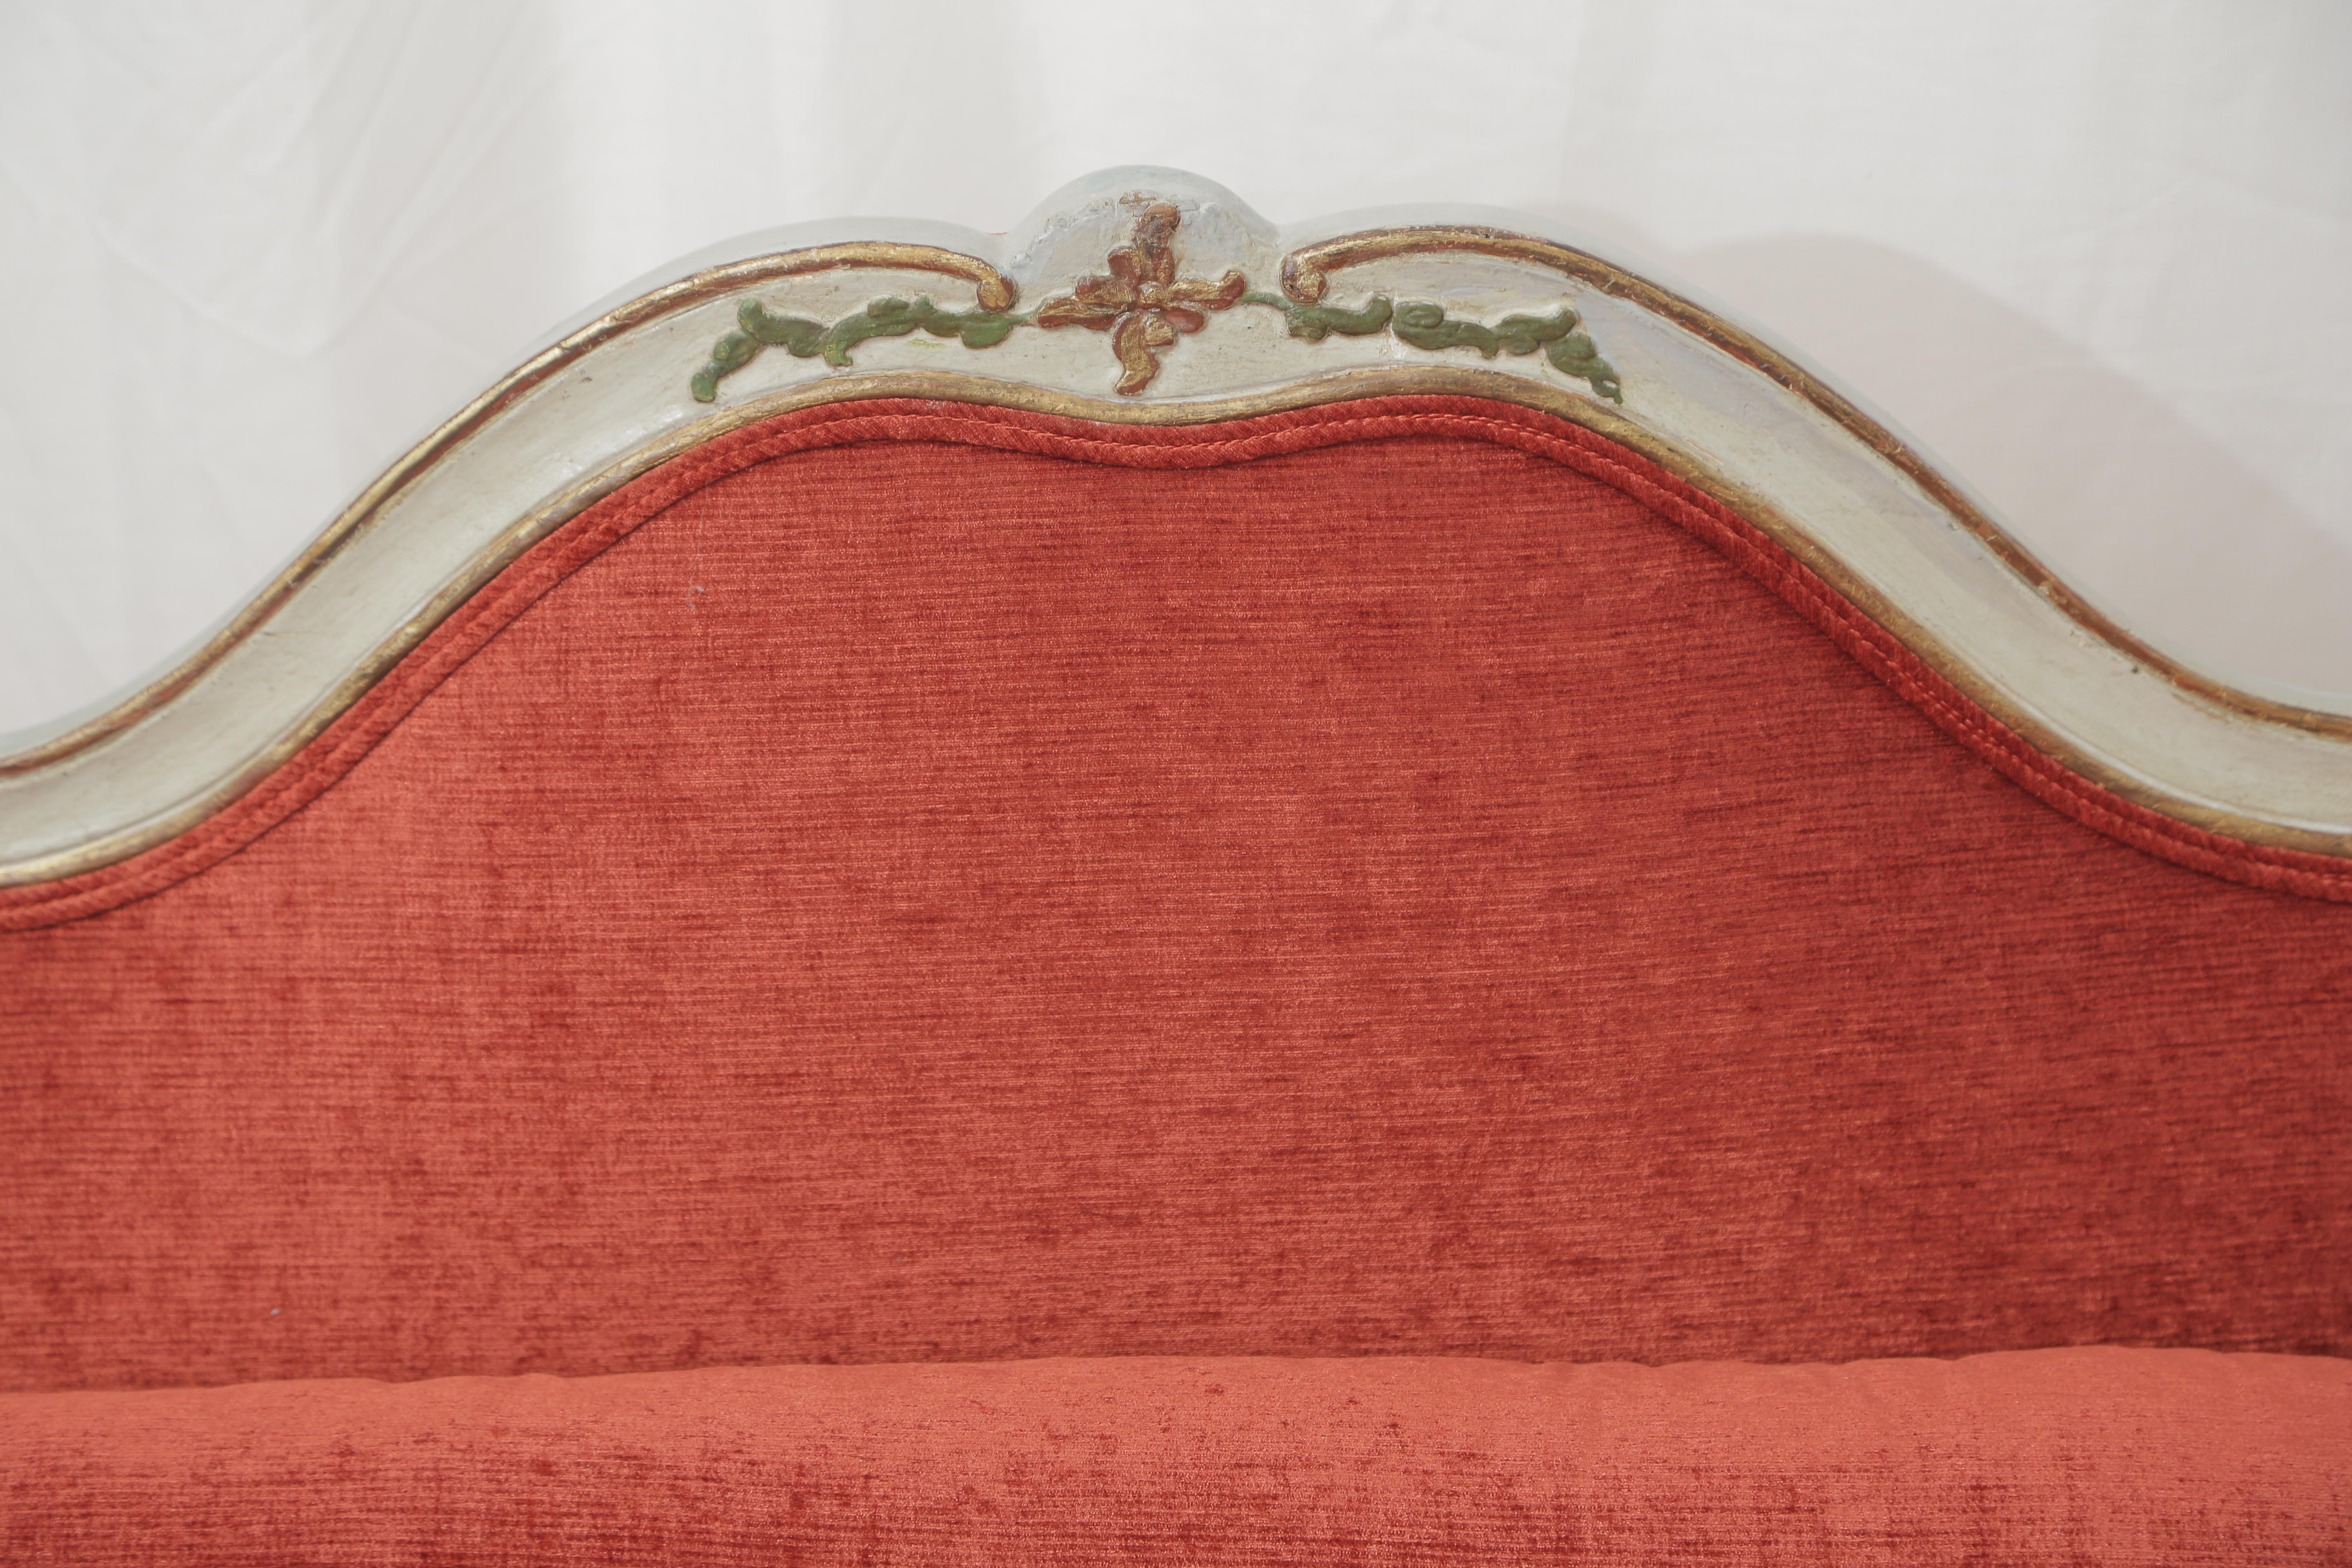 19th century sofa styles